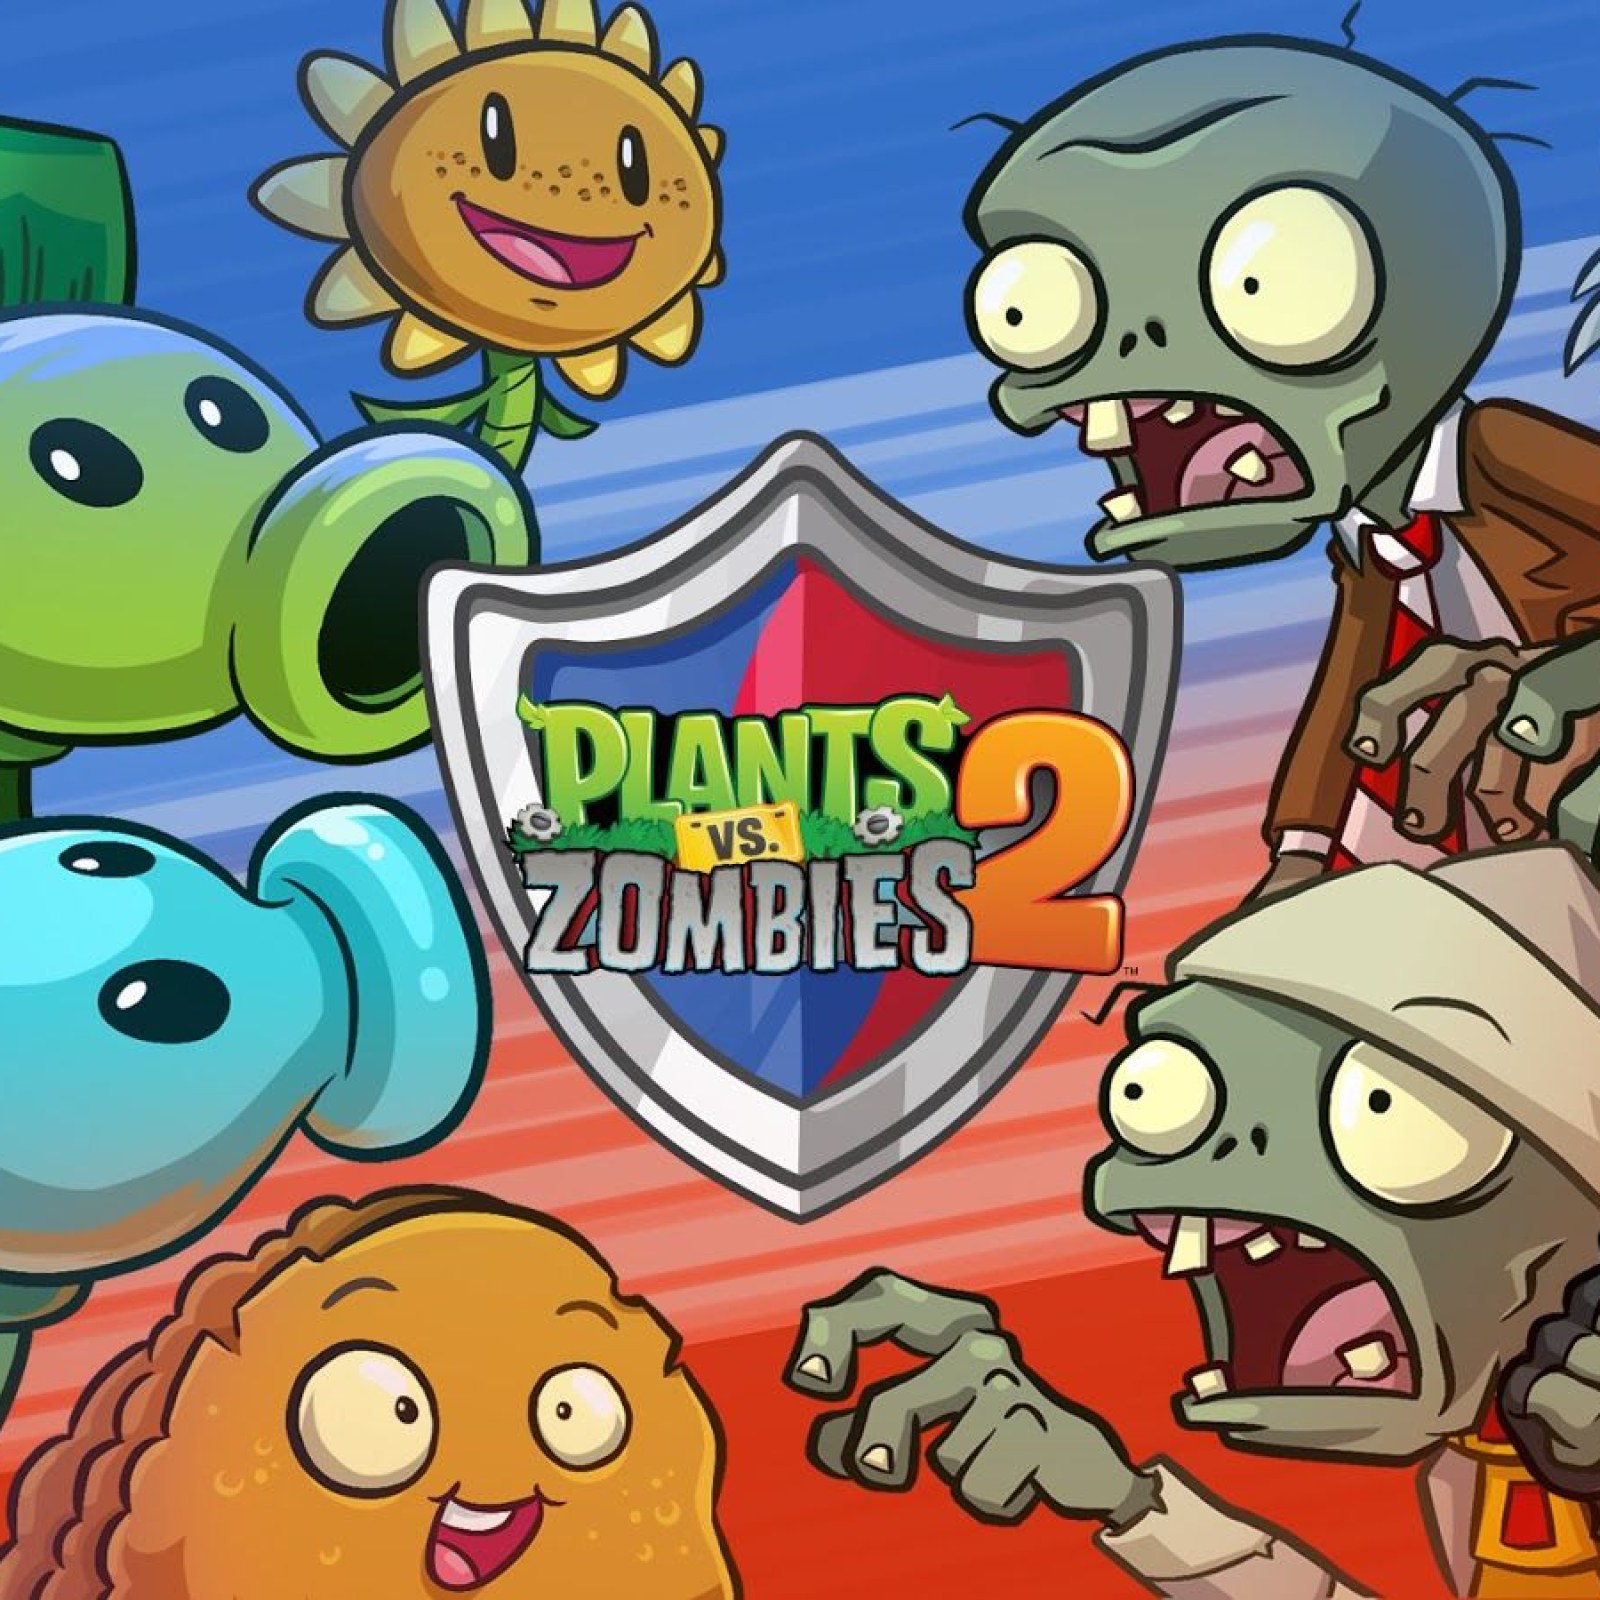 Plants vs Zombies 2' Update Brings PVP Mode